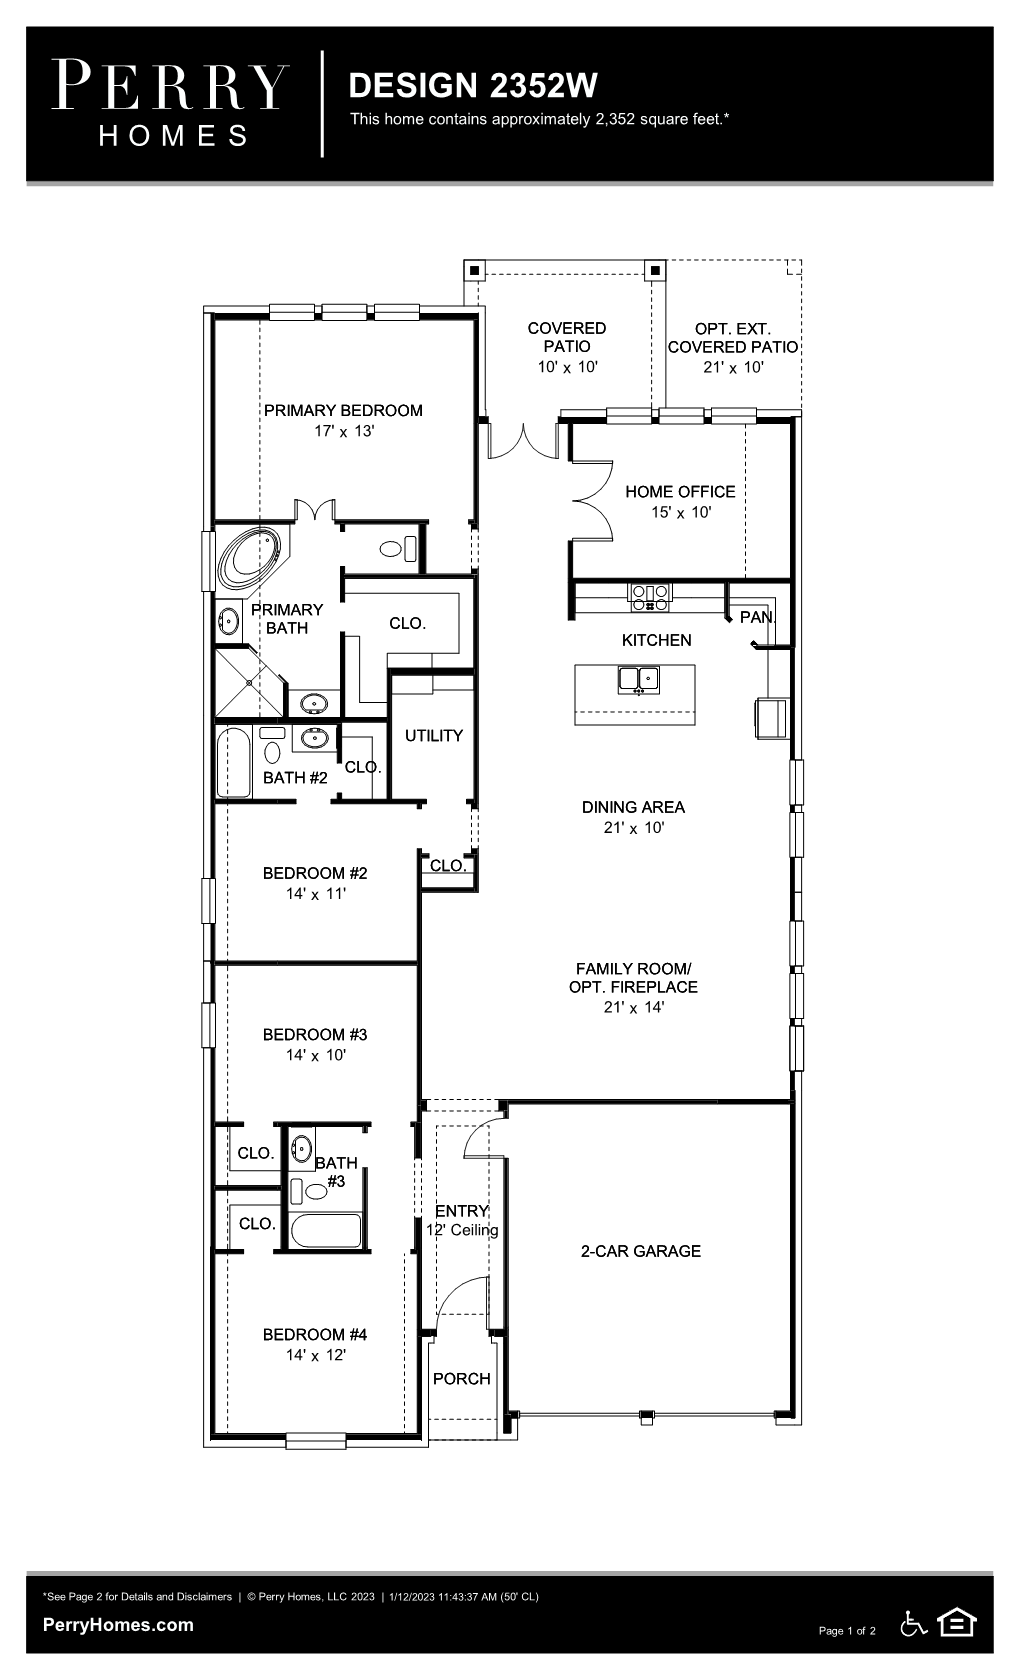 Floor Plan for 2352W